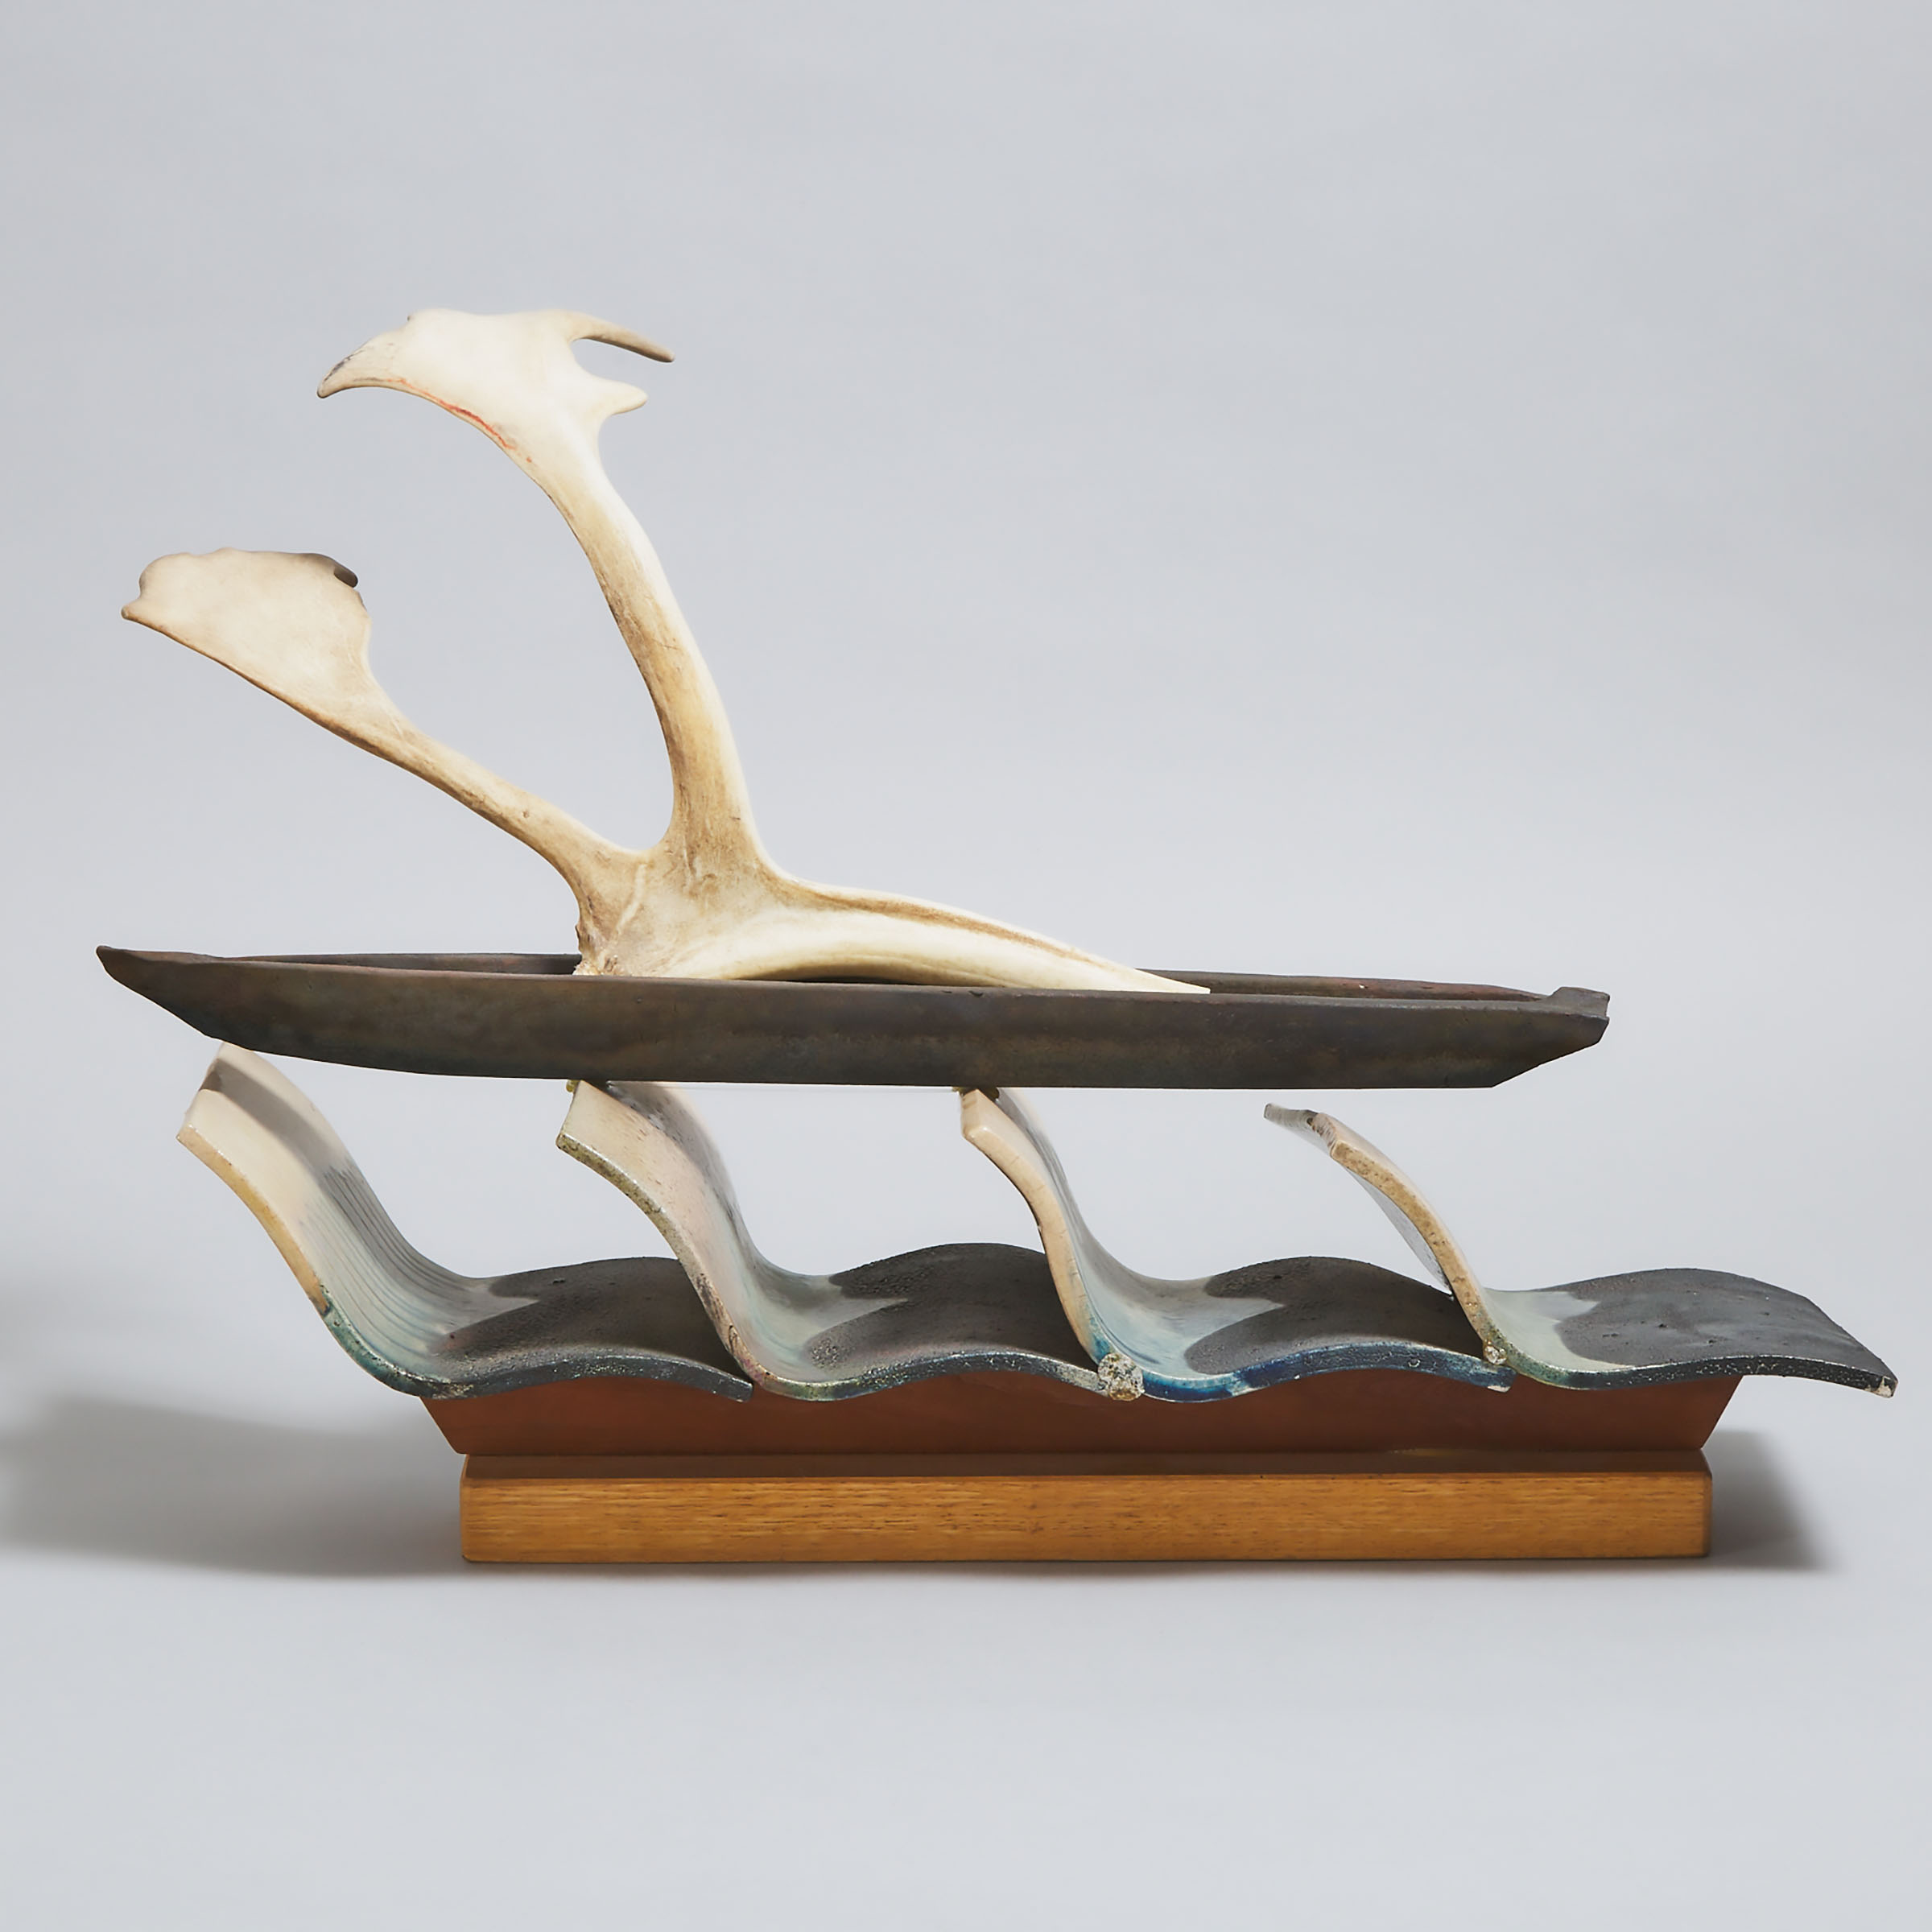 Richard and Susan Surette, (Canadian, b.1940 and 1947), Raku Sculpture with Antler, Studio Surette, c.1994